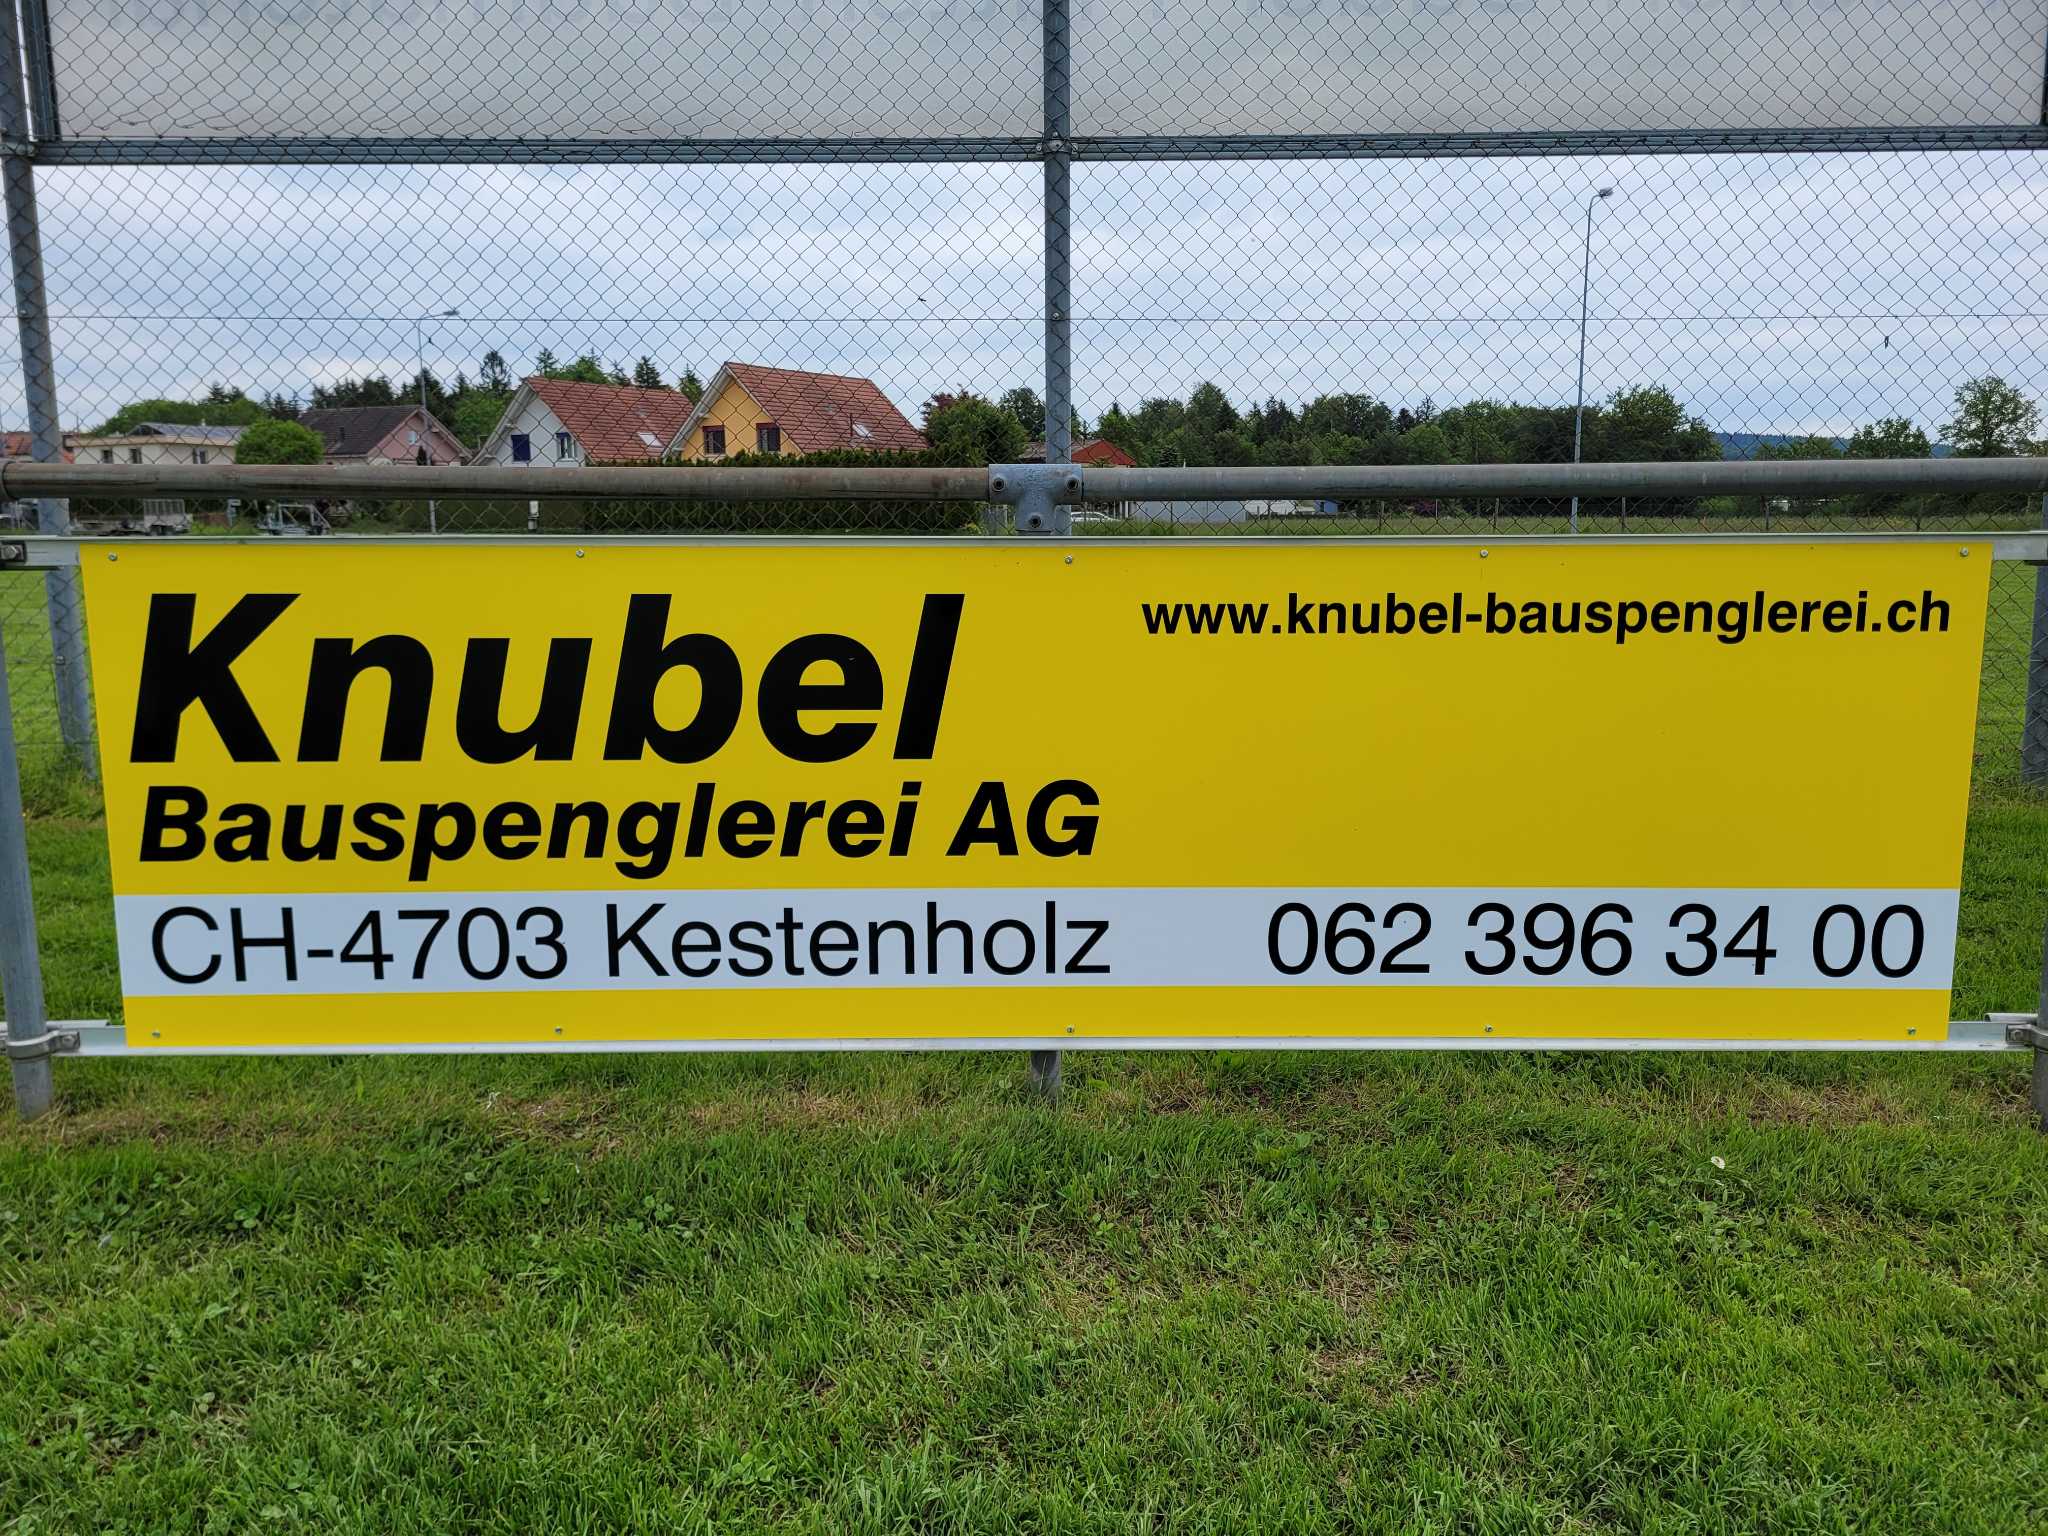 Knubel Bauspenglerei AG